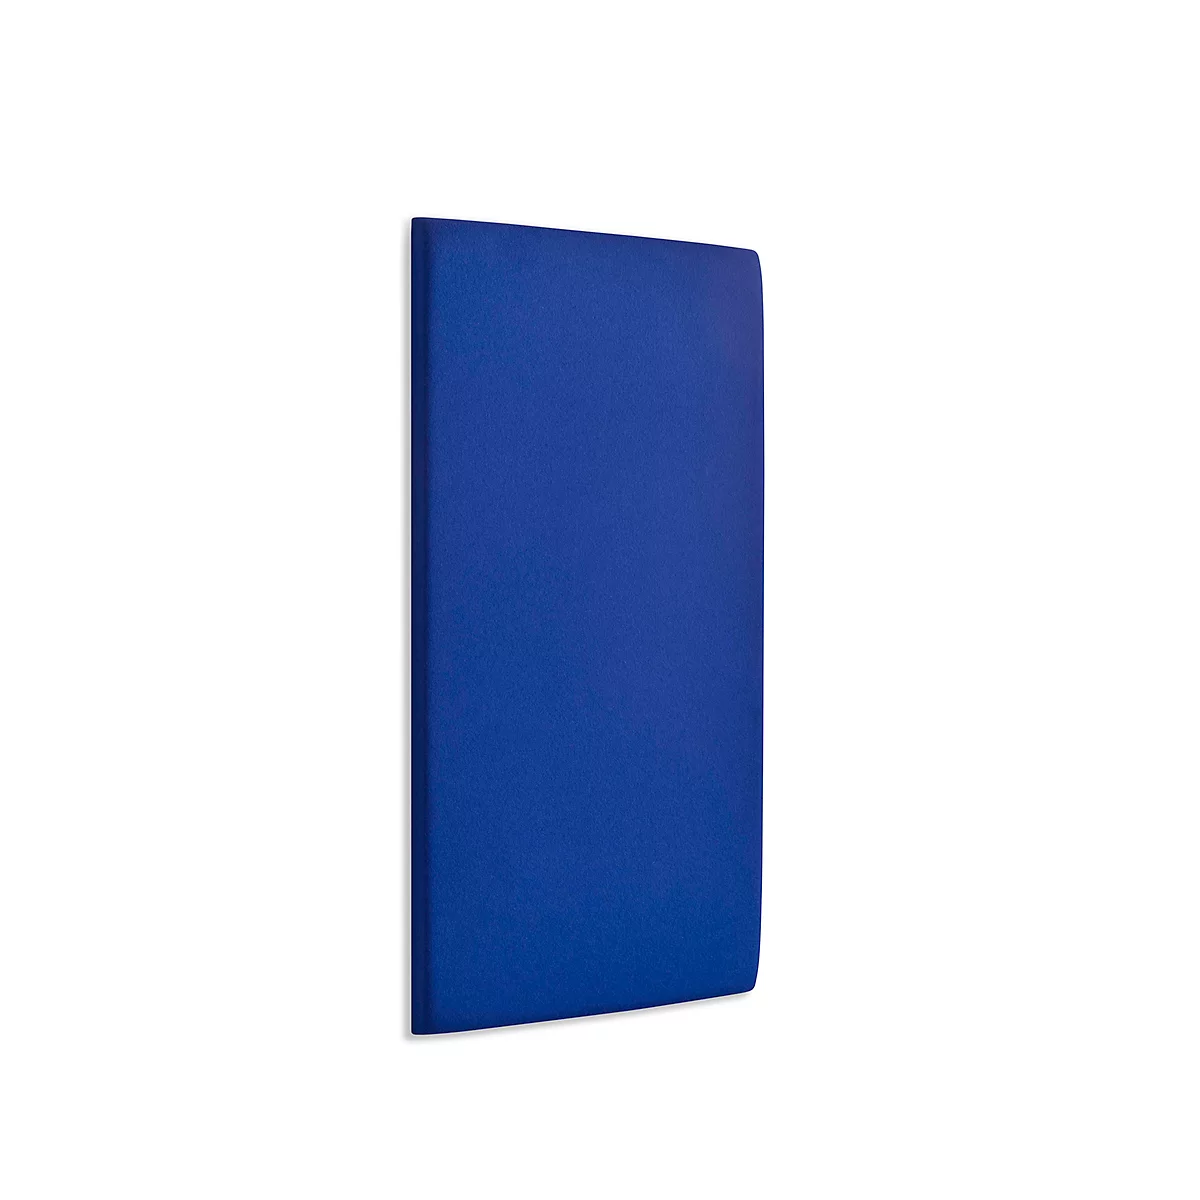 Wandpaneele m. Magnetbefestigung, B 604 x T 1204 x H 47 mm, glatte Oberfläche, azurblau